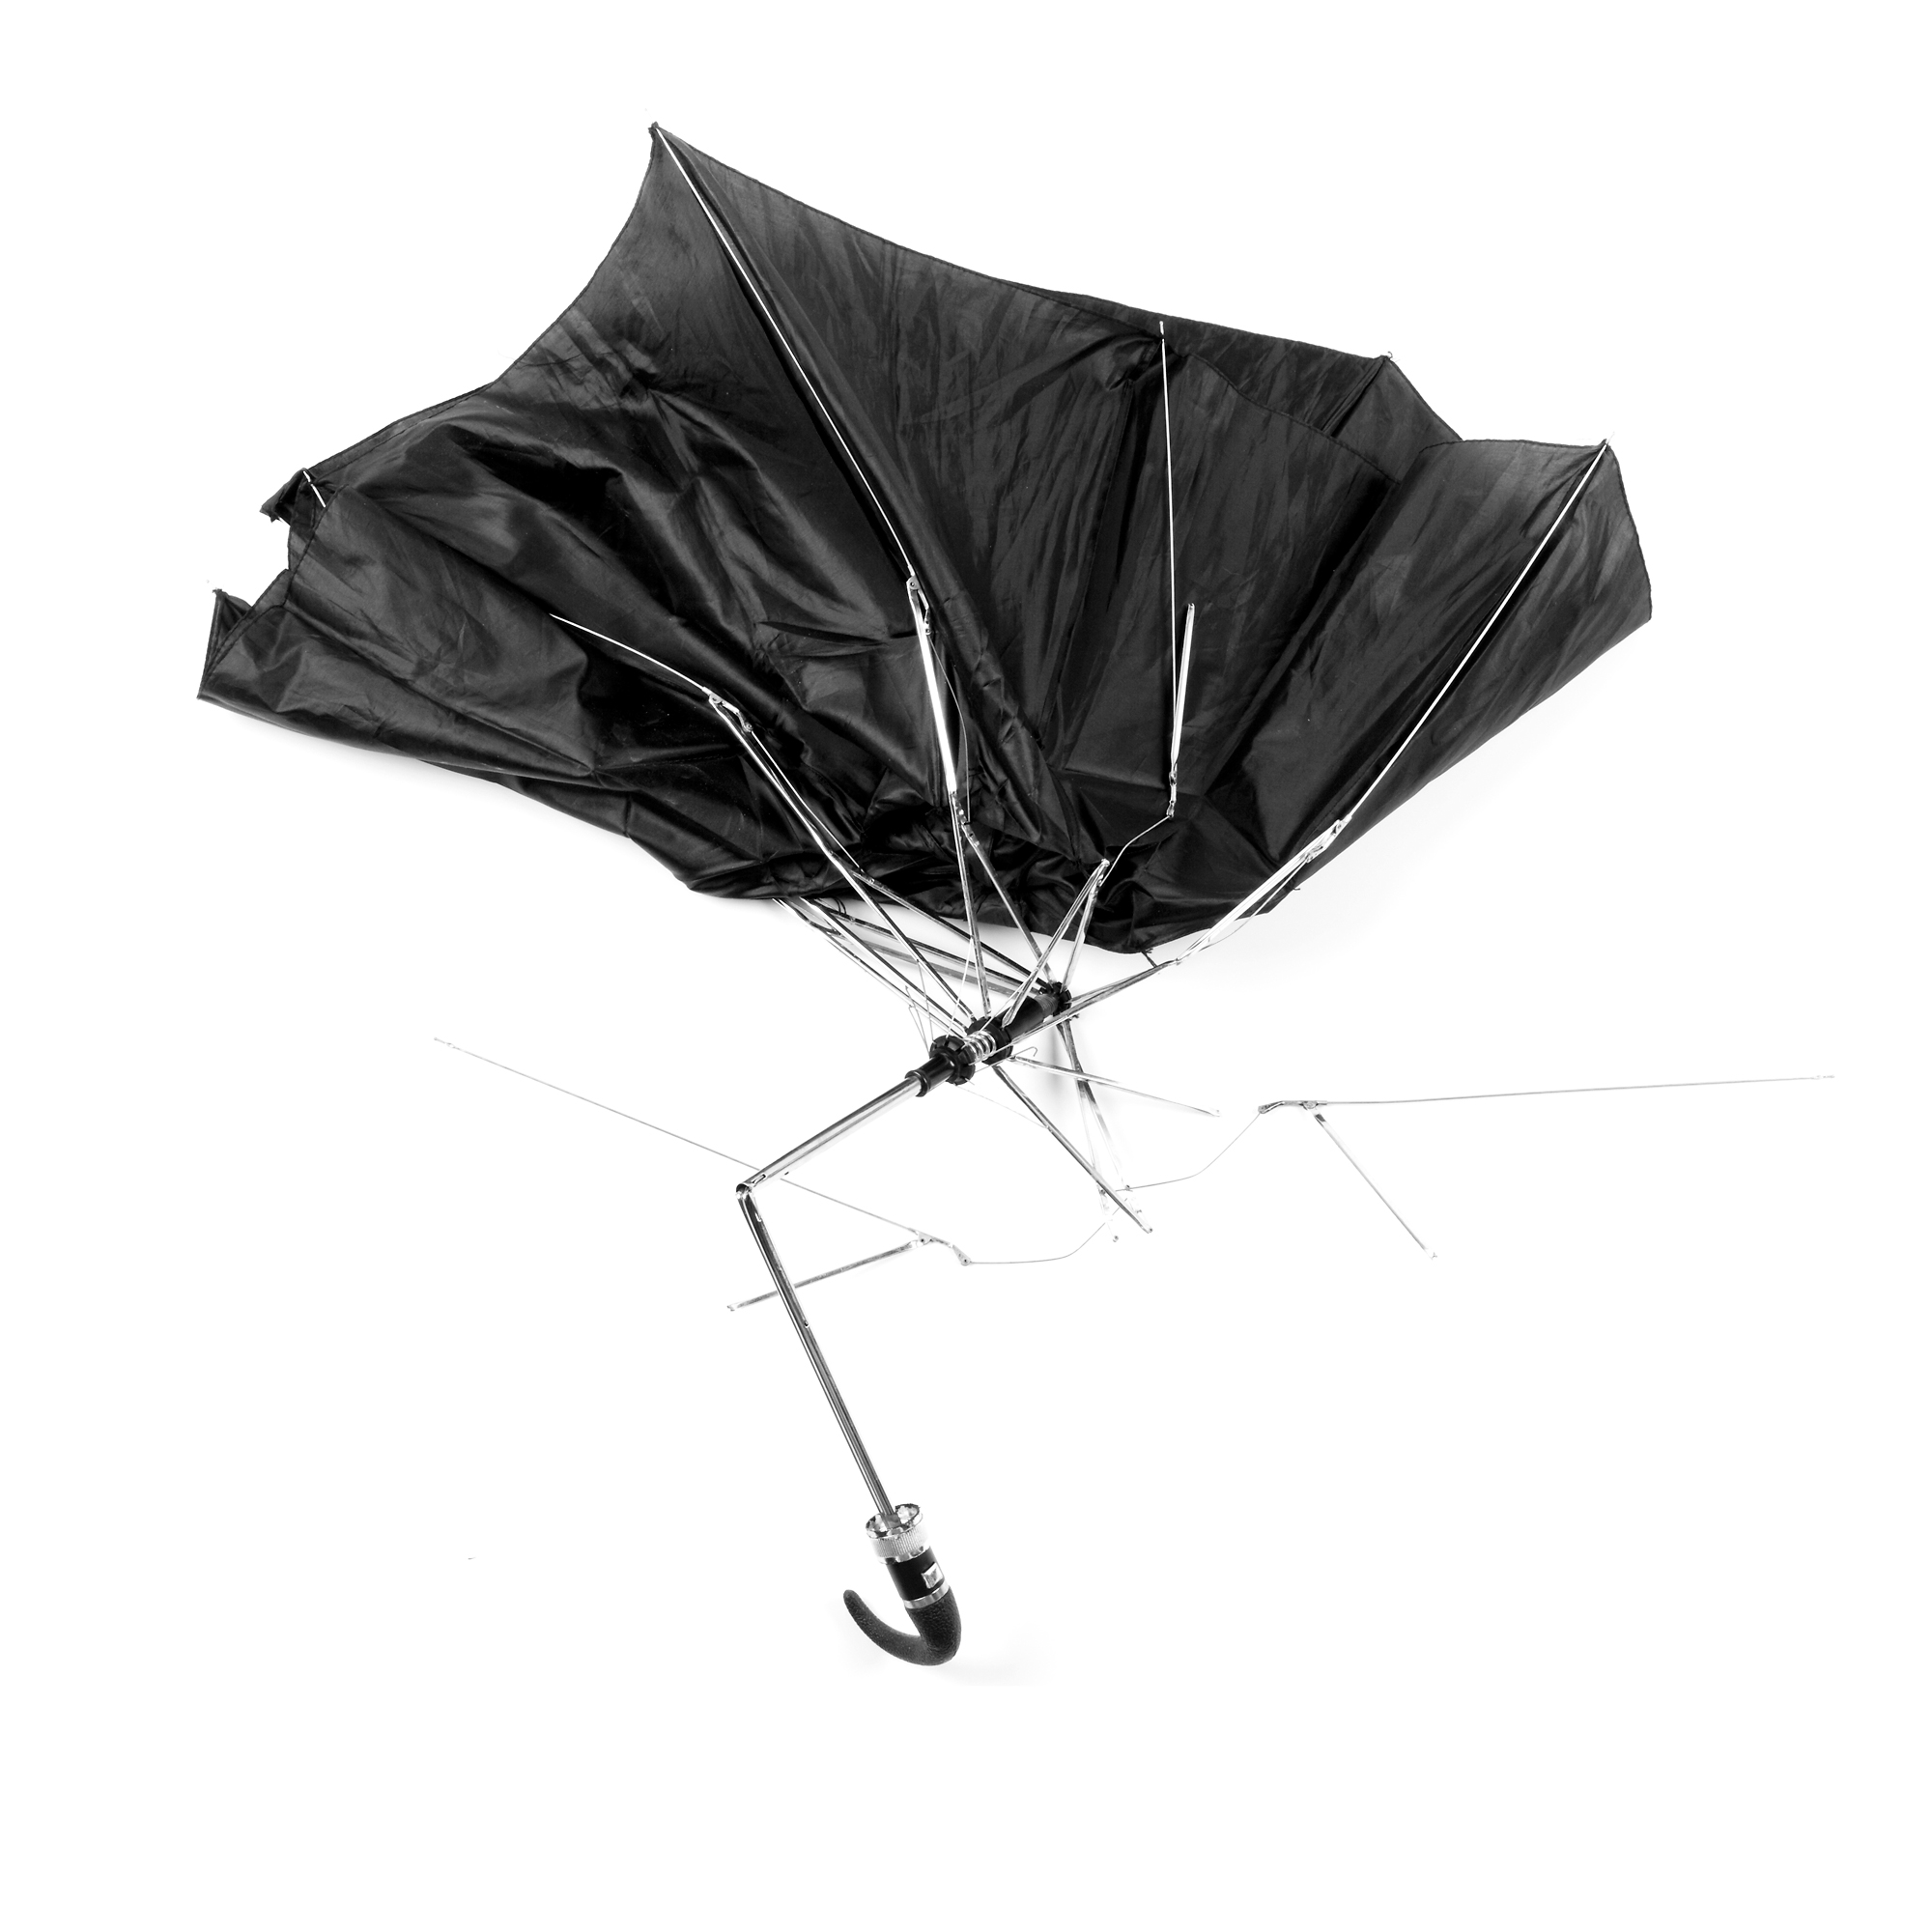 Mangled Umbrella Photos Put A Staple Of City Life In The Spotlight